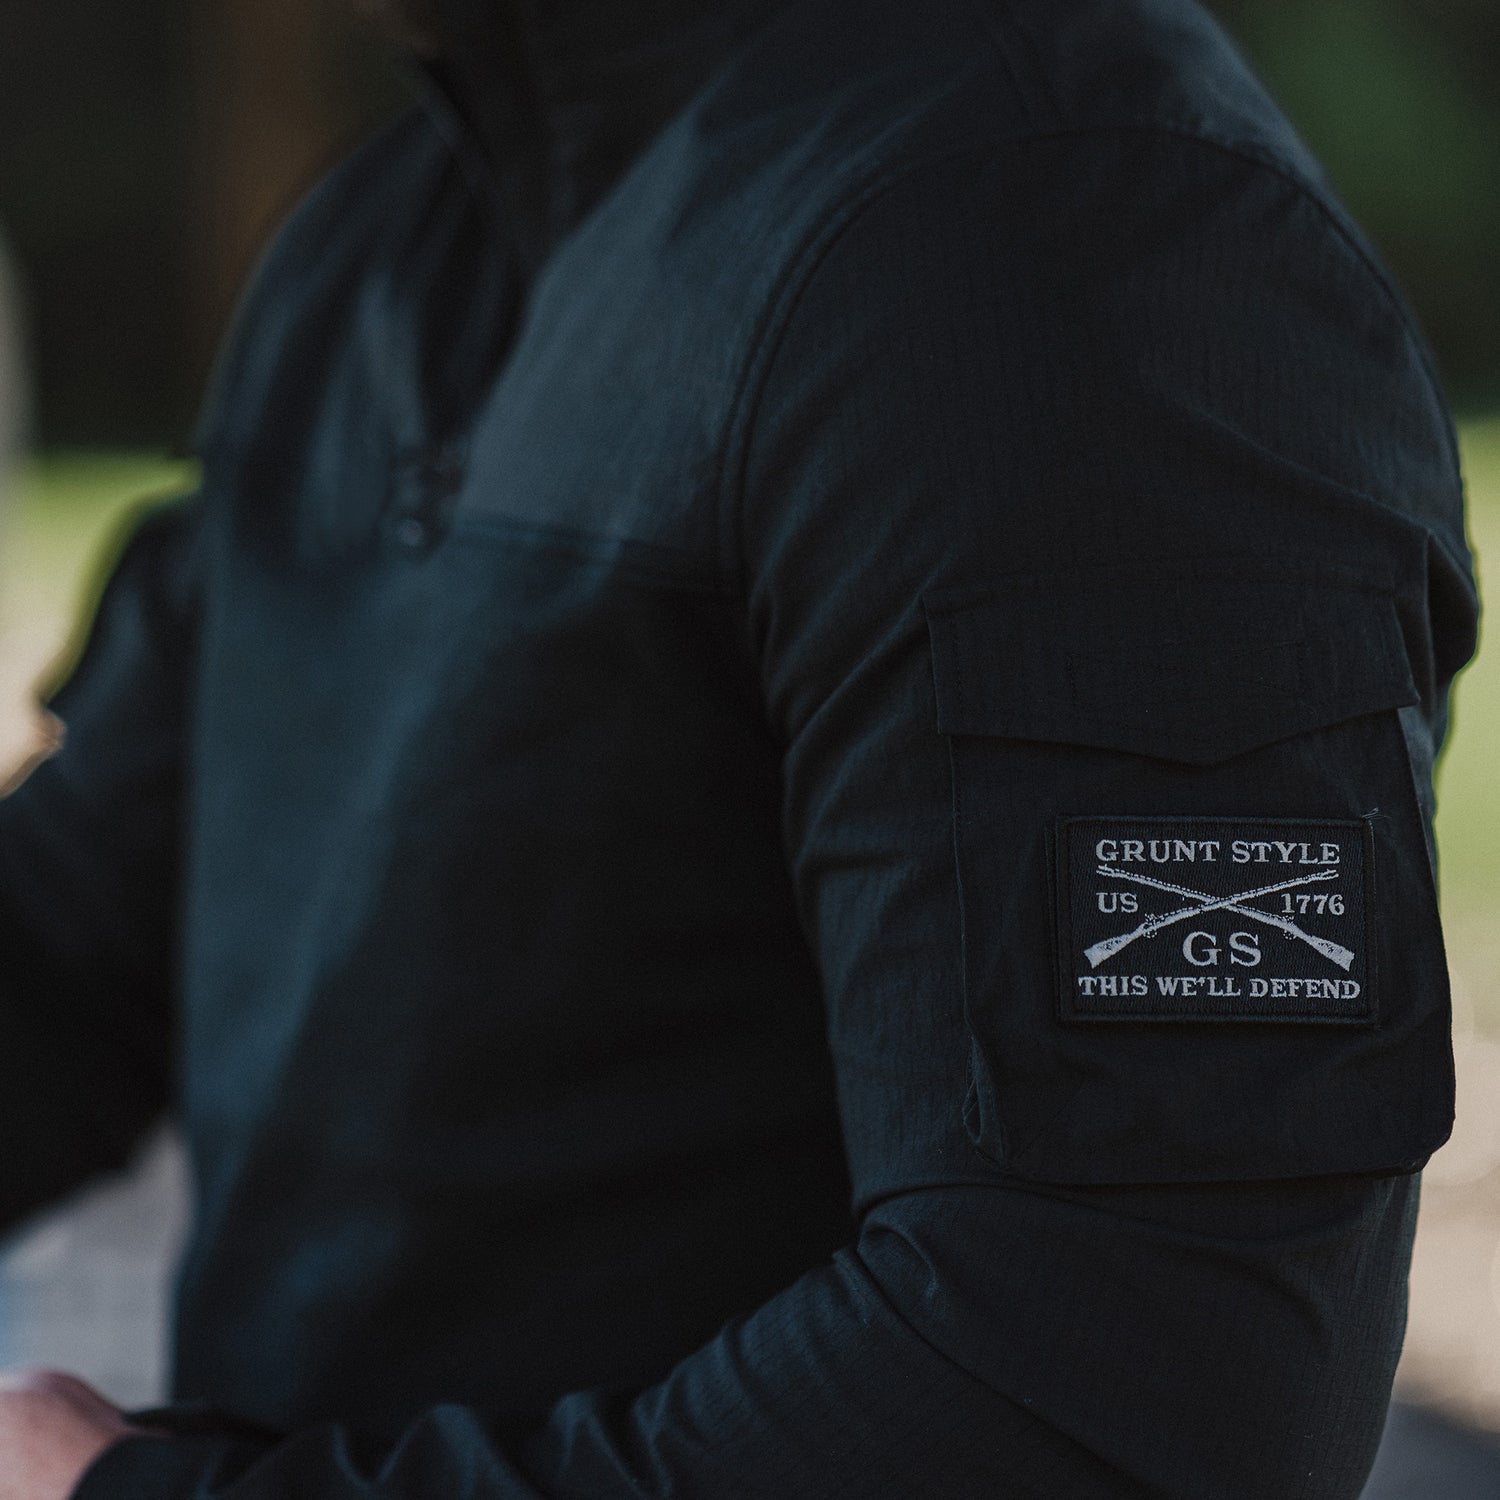 Black Quarter Zips for Men - Tactical Shirts 